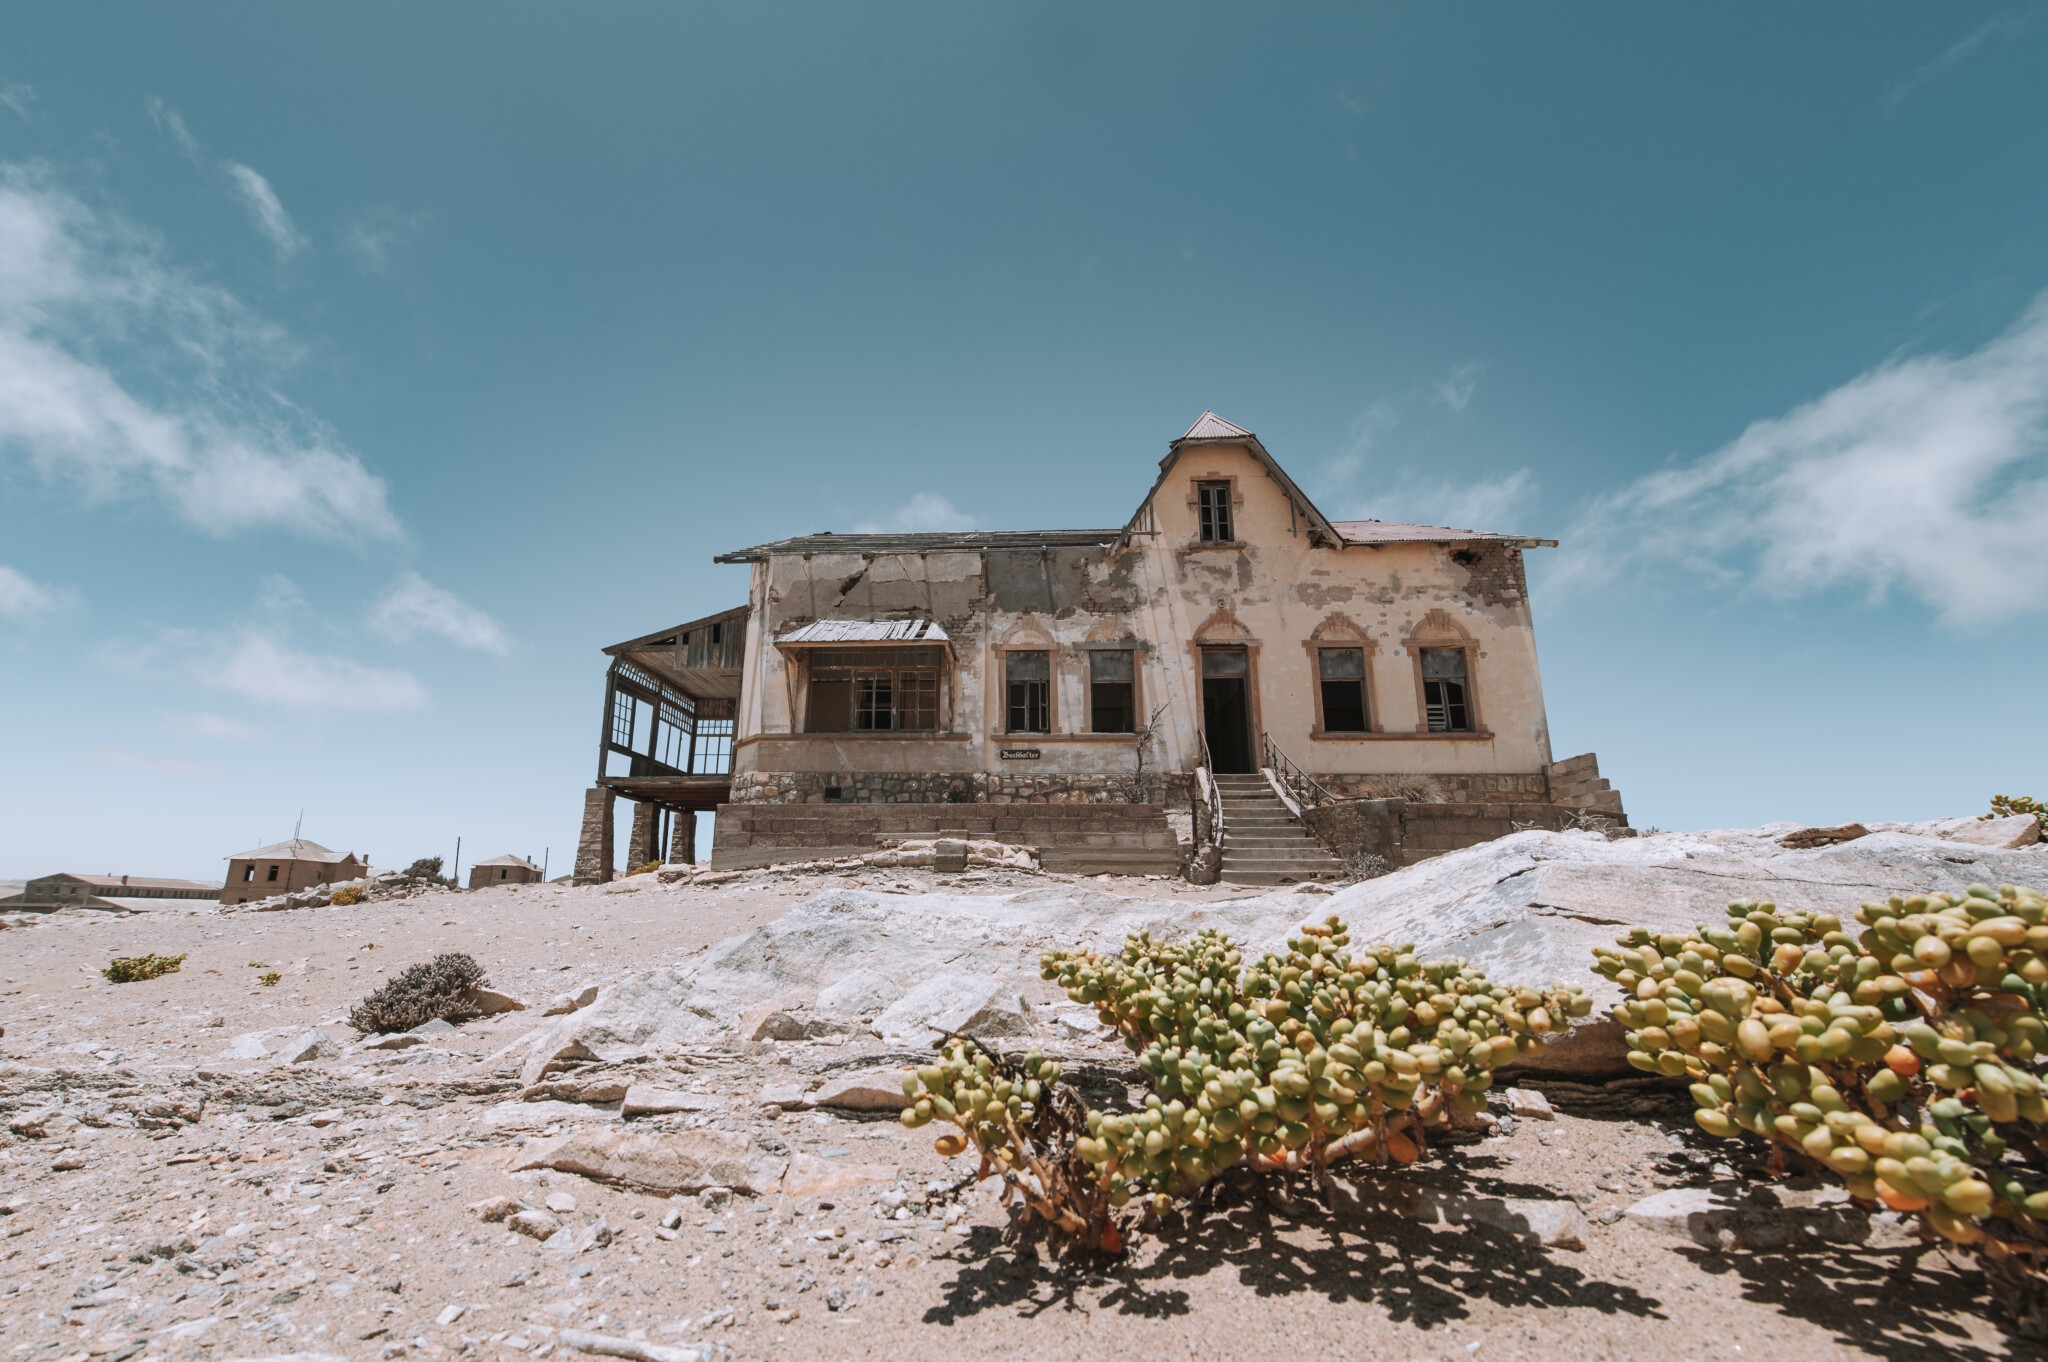 Leere Gebäude in Kolmannskuppe in Namibia